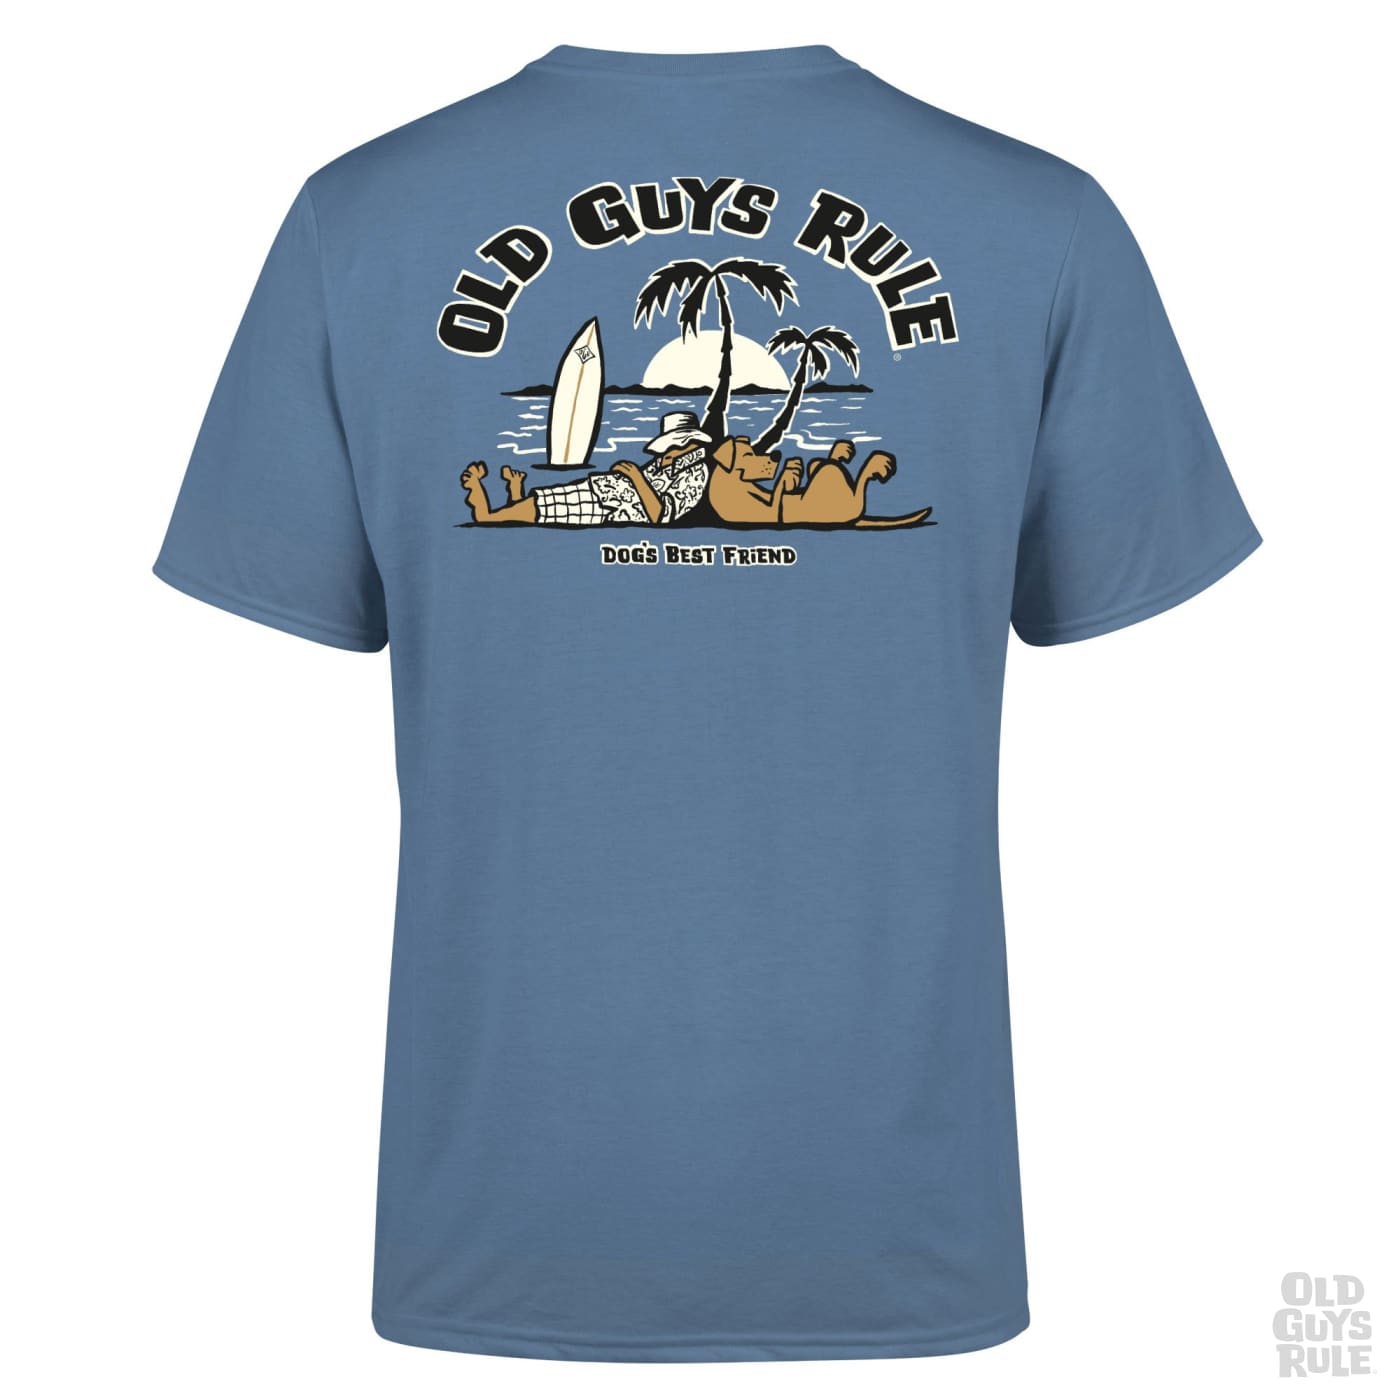 Old Guys Rule 'Dogs Best Friend II' T-Shirt - Indigo Blue